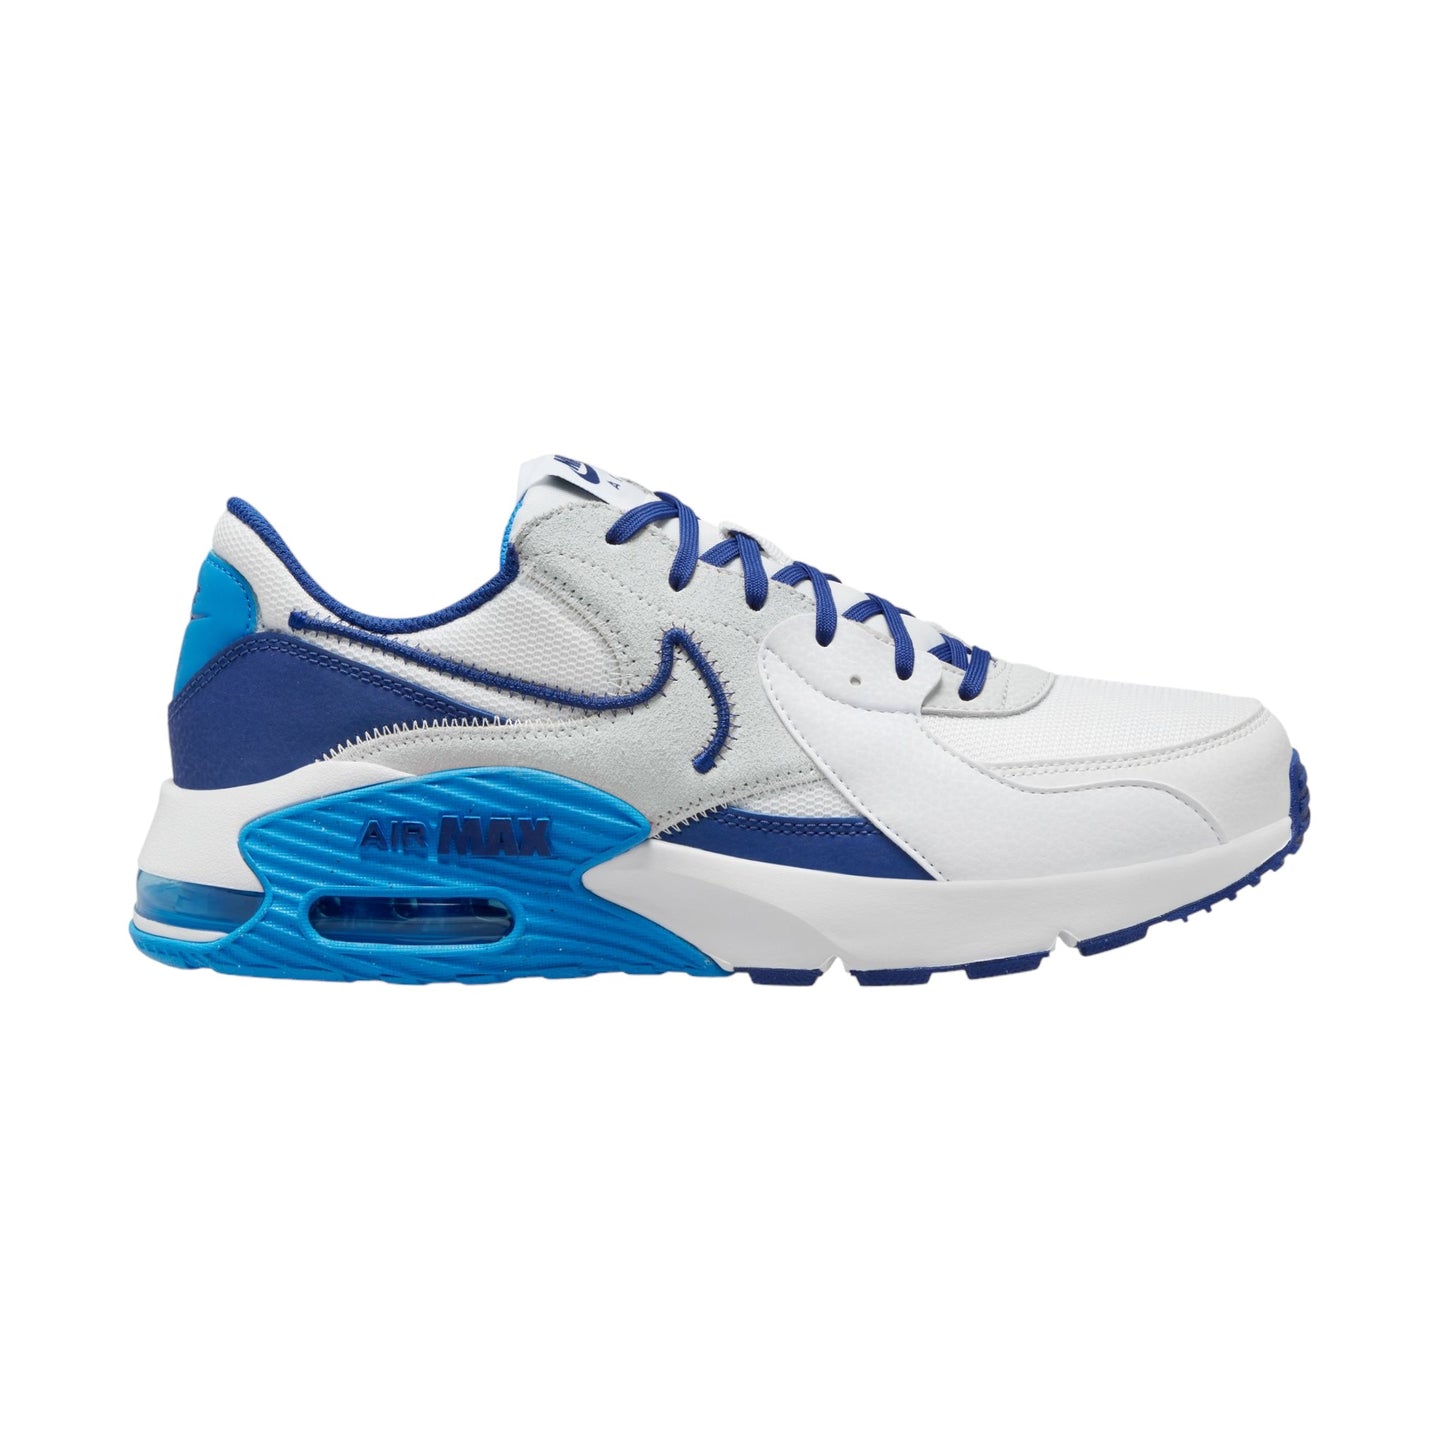 .Nike Air Max EXCEE LIFESTYLE SHOES - WHITE/DEEP ROYAL BLUE-PHOTO BLUE (DZ0795-100) - RY - R1L4